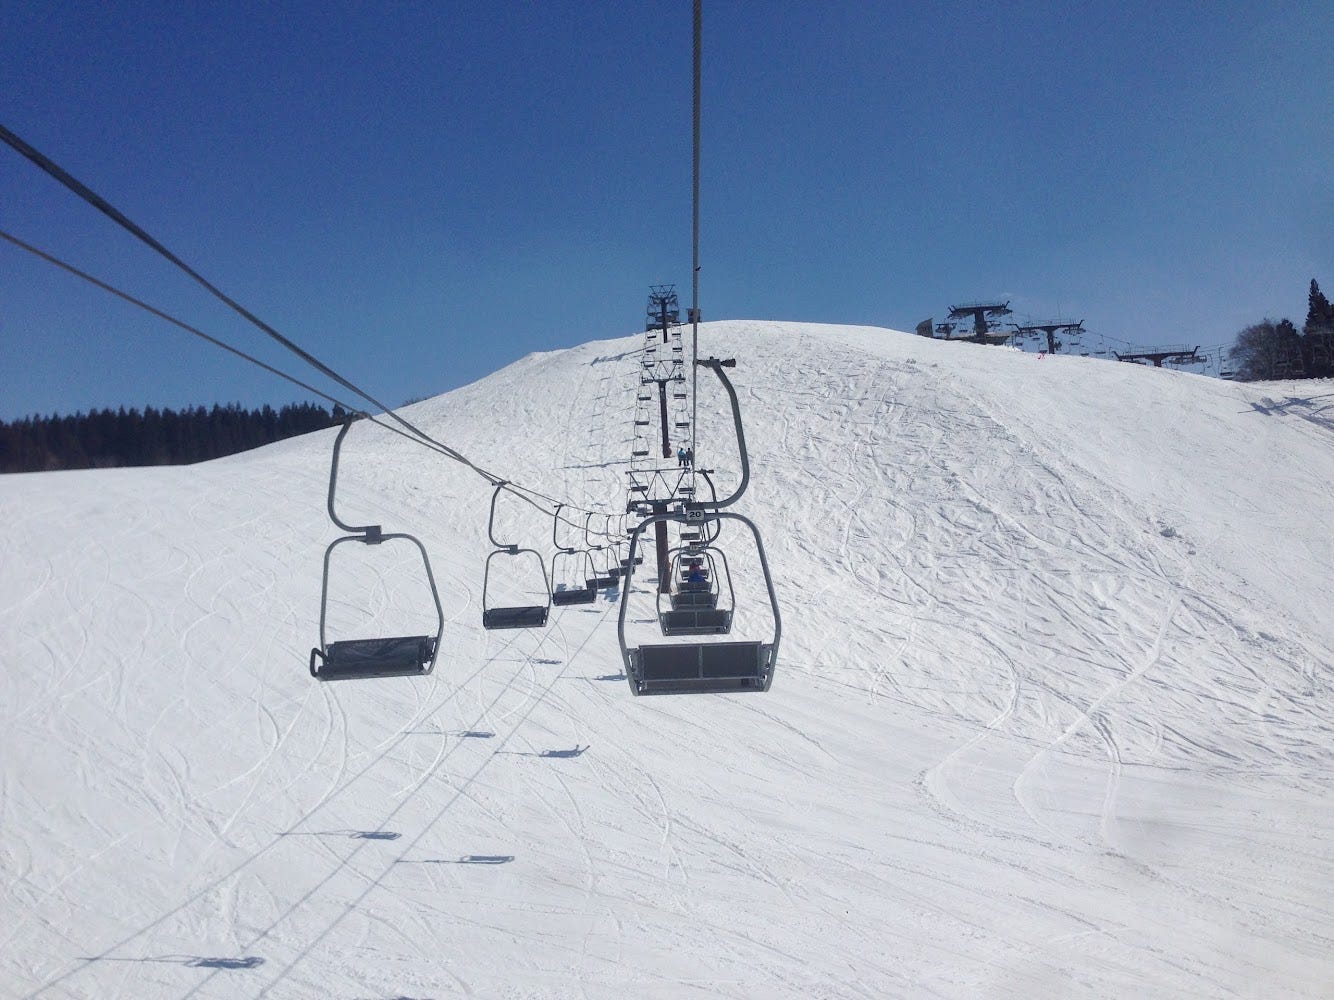 Photo on the Yudonosan Ski Field lift reaching the top of a snowy hill